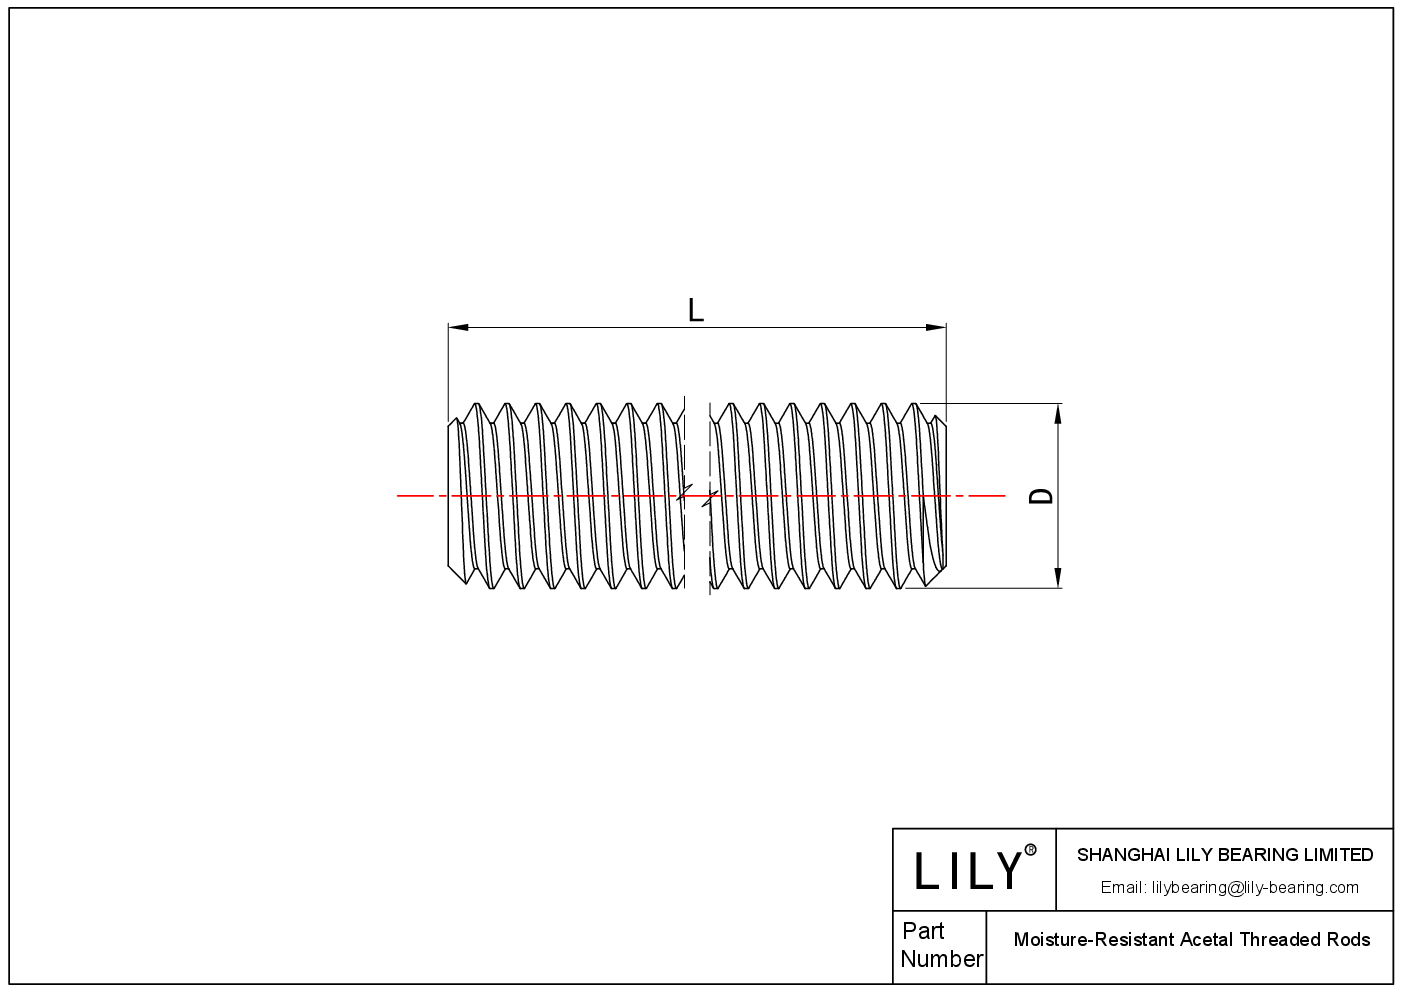 JIIHDACAA Moisture-Resistant Acetal Threaded Rods cad drawing